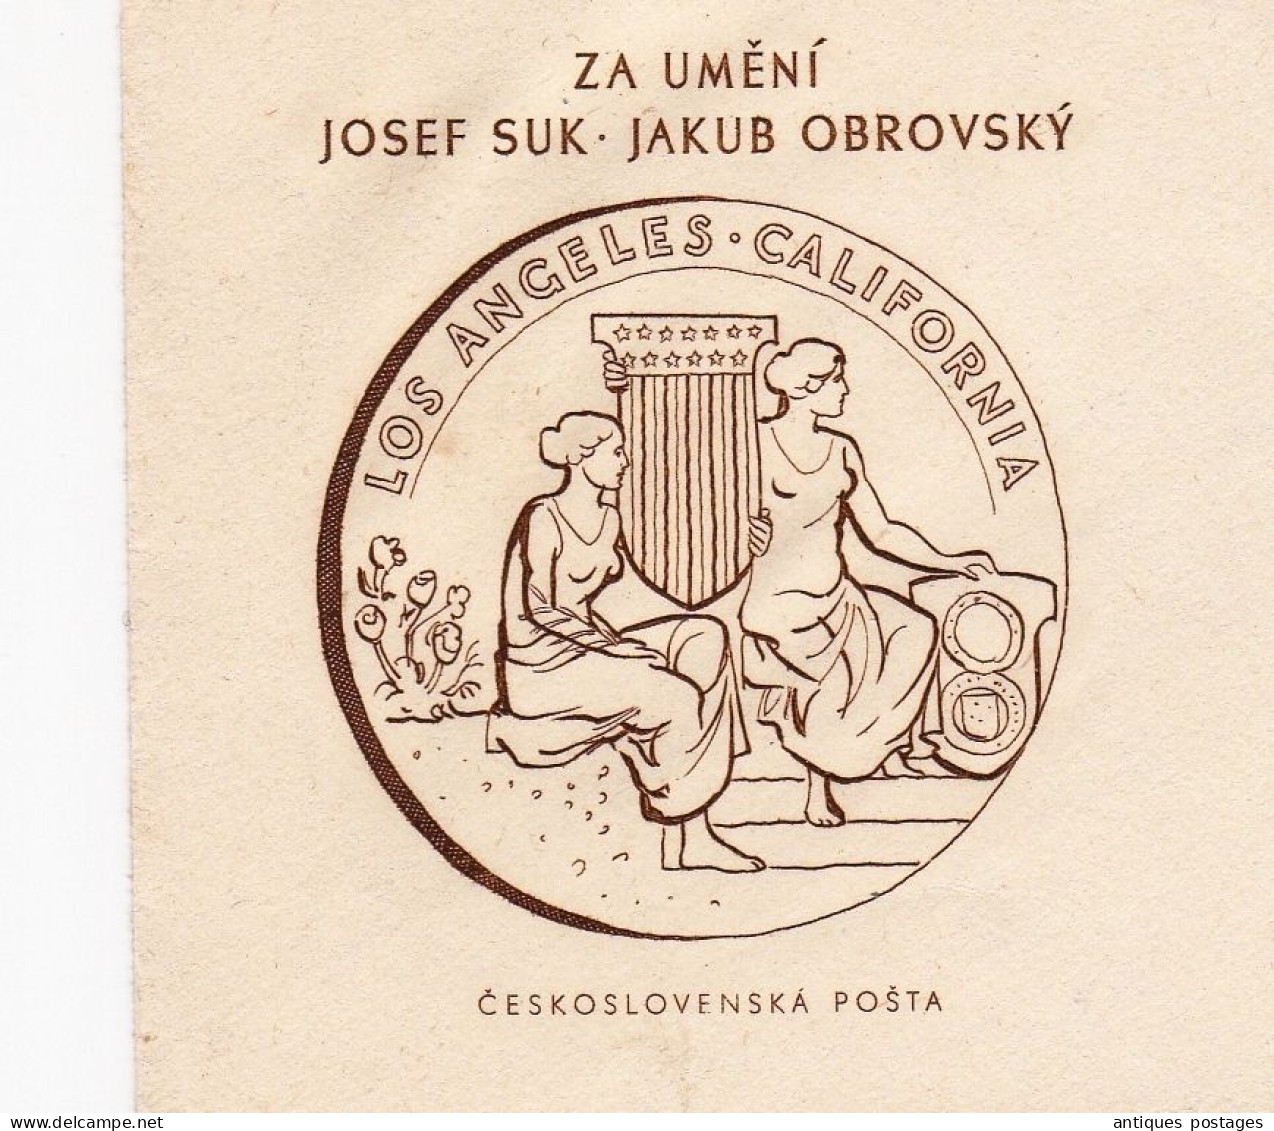 Art Competition Milevsko 1965 Tchécoslovaquie Zagreb Olympics Games Czechoslovakia Yugoslavia Josef Suk Jakub Obrovský - Cartas & Documentos